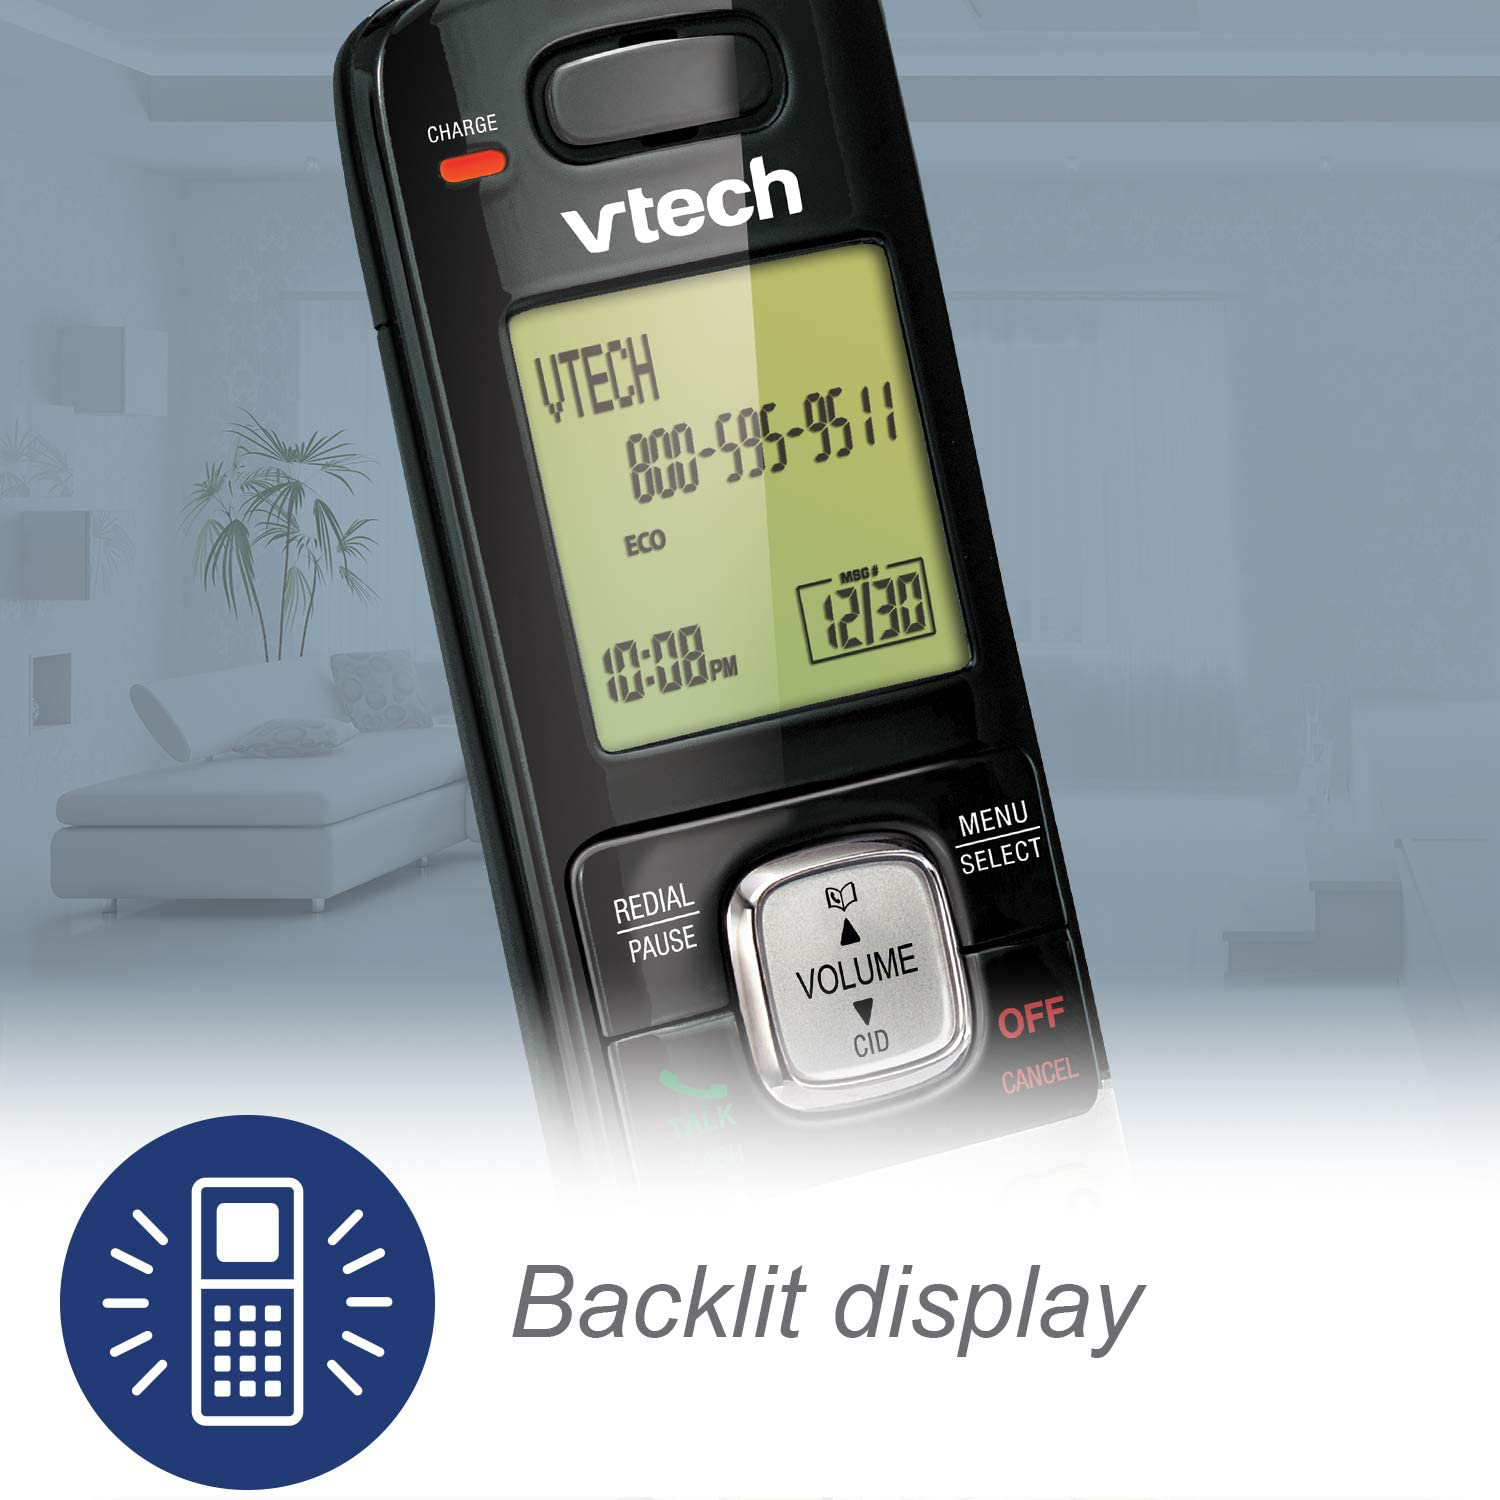 VTech CS6719-15 DECT 6.0 Phone with Caller ID/Call Waiting, 1 Cordless Handset